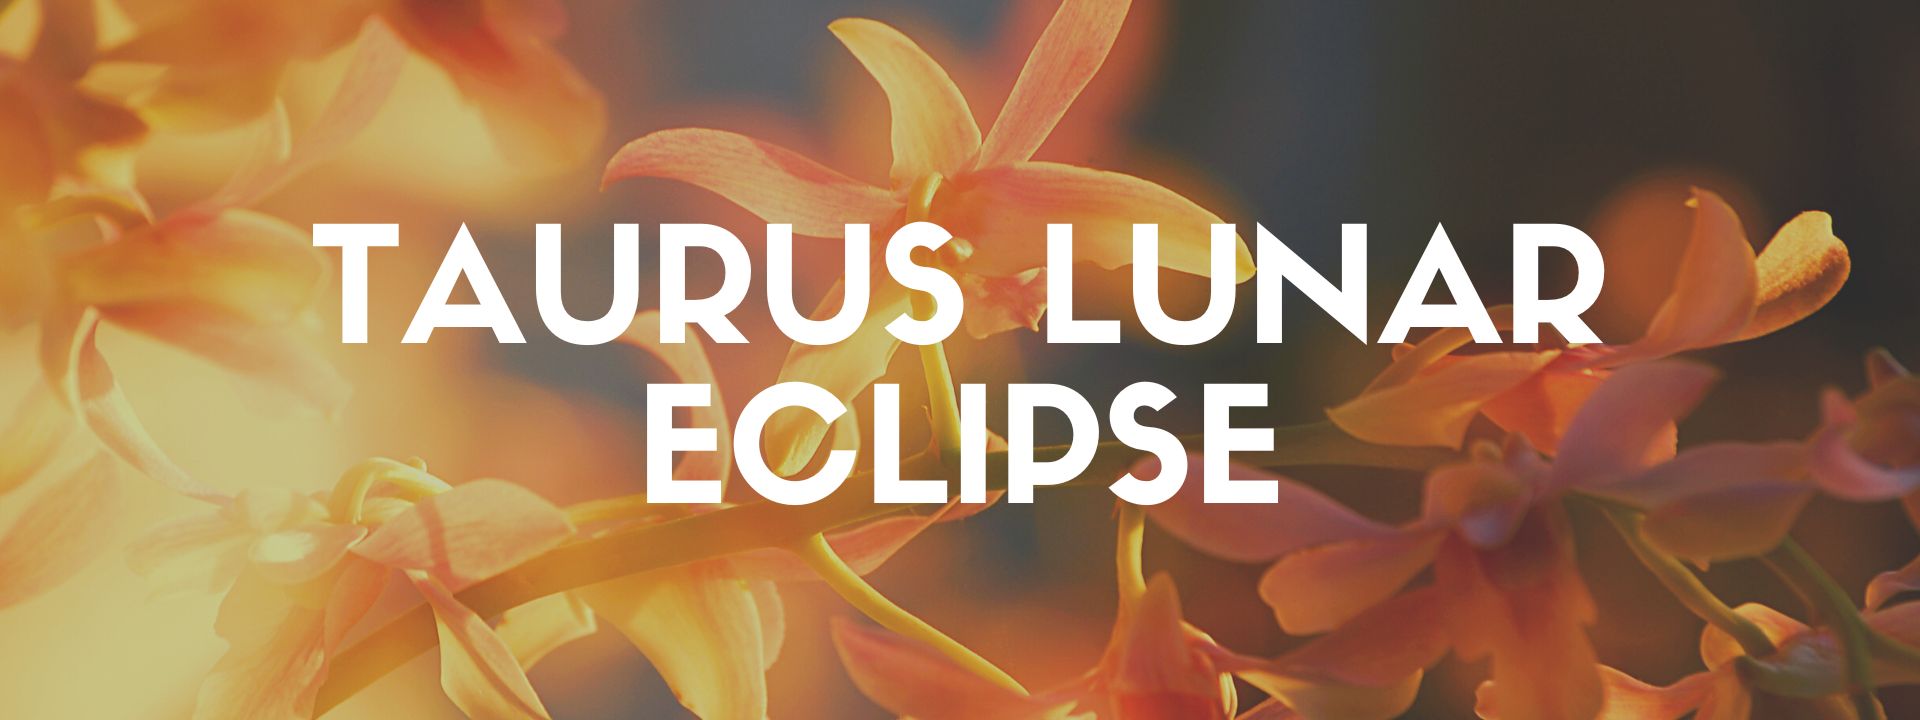 olar eclipse 2022 astrology